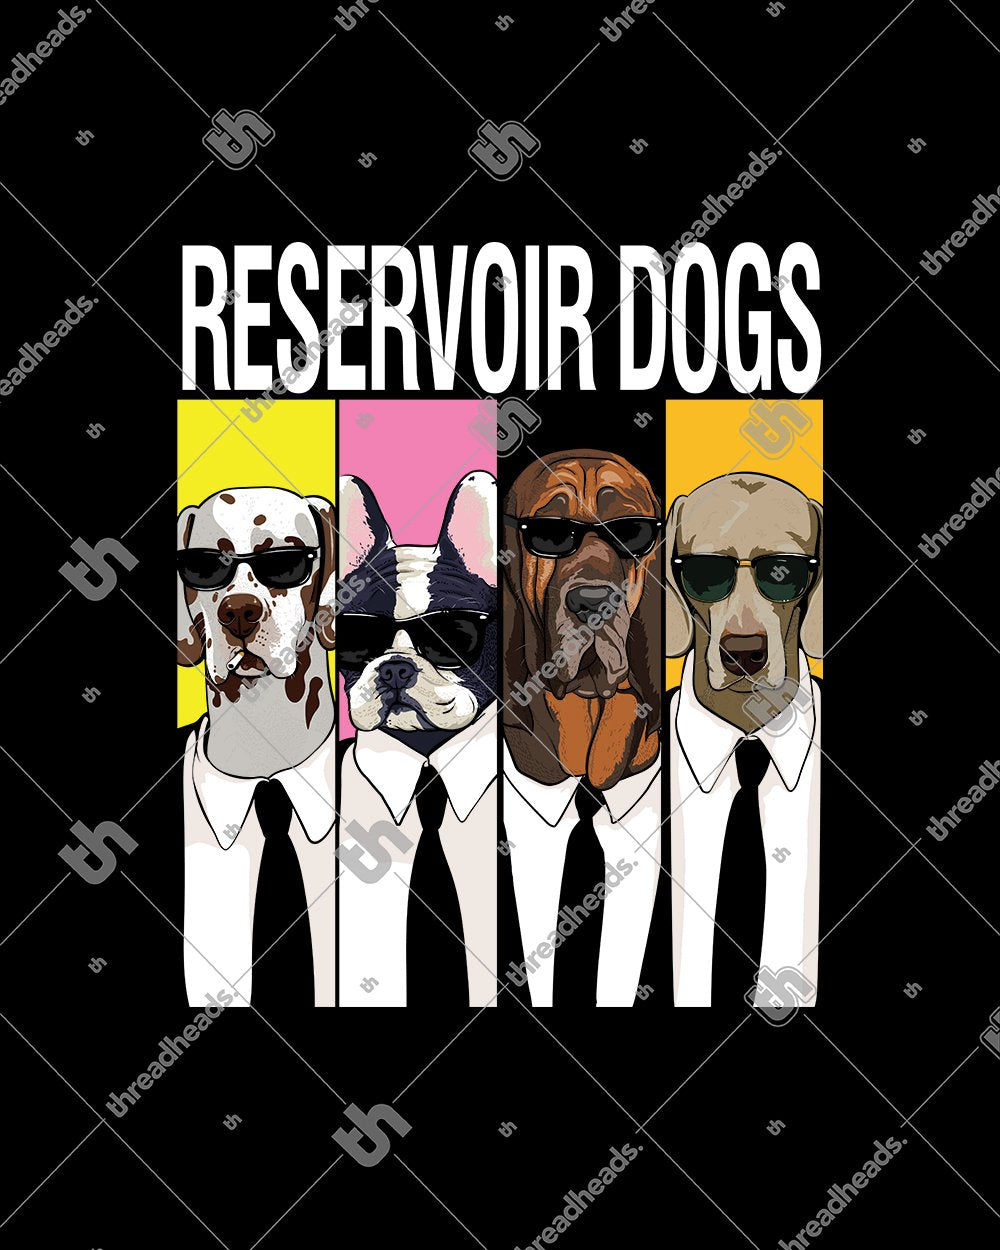 Reservoir Dogs Sweater Europe Online #colour_black